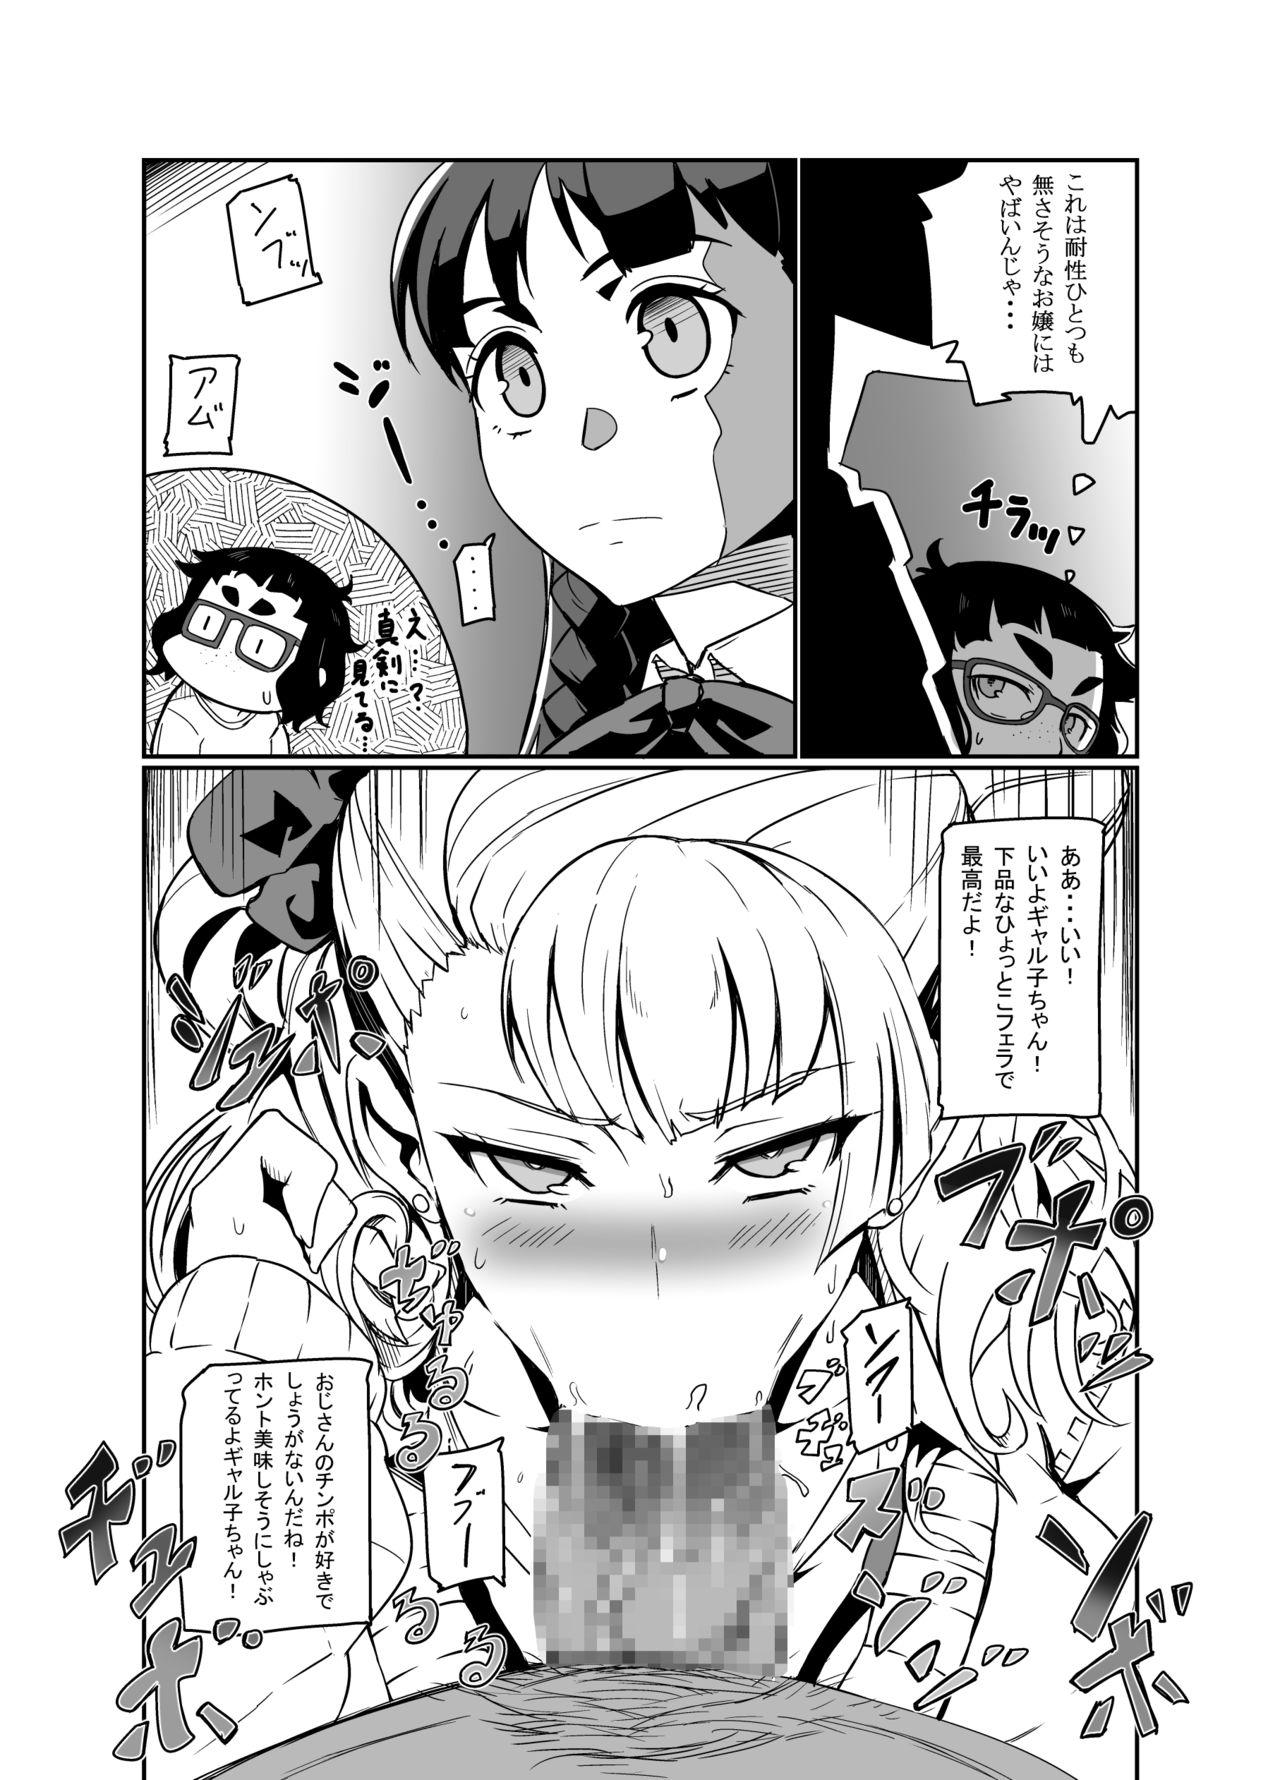 Rebolando Galko Ah! - Oshiete galko-chan Cut - Page 8